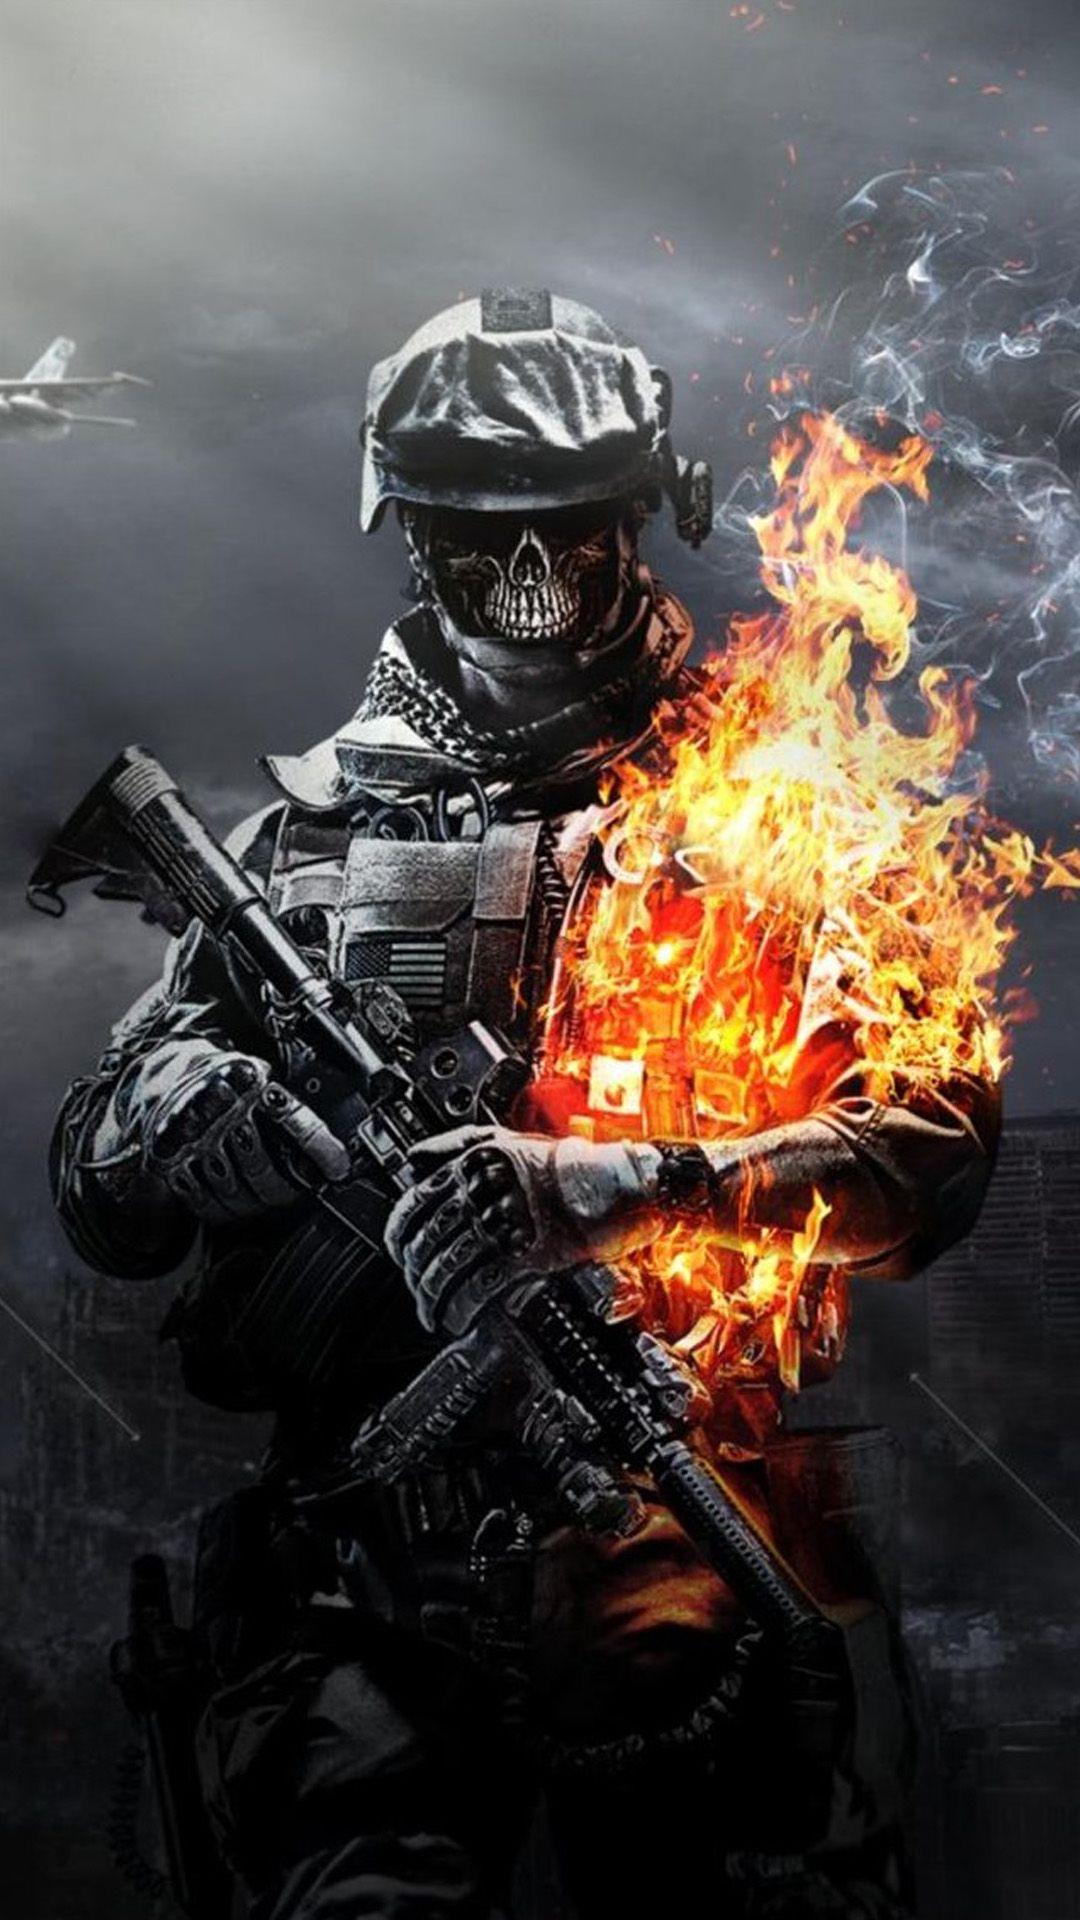 ẢNH NỀN ĐIỆN THOẠI CODM CHIẾN  Call of Duty Mobile VN  Facebook